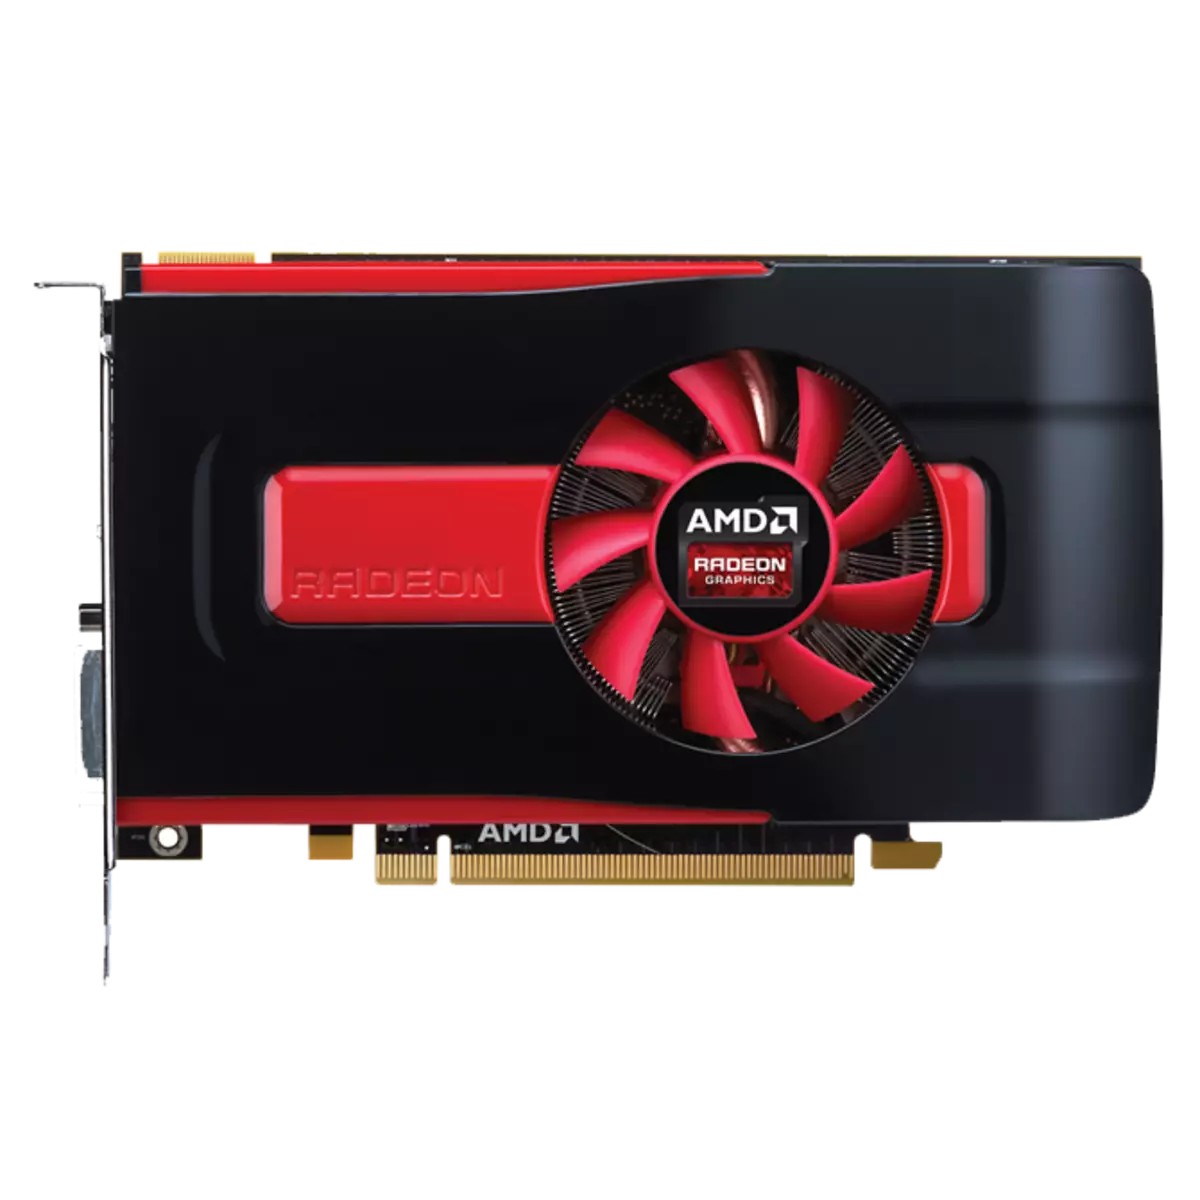 AMD Radeon HD 7700 Series Download Drivers